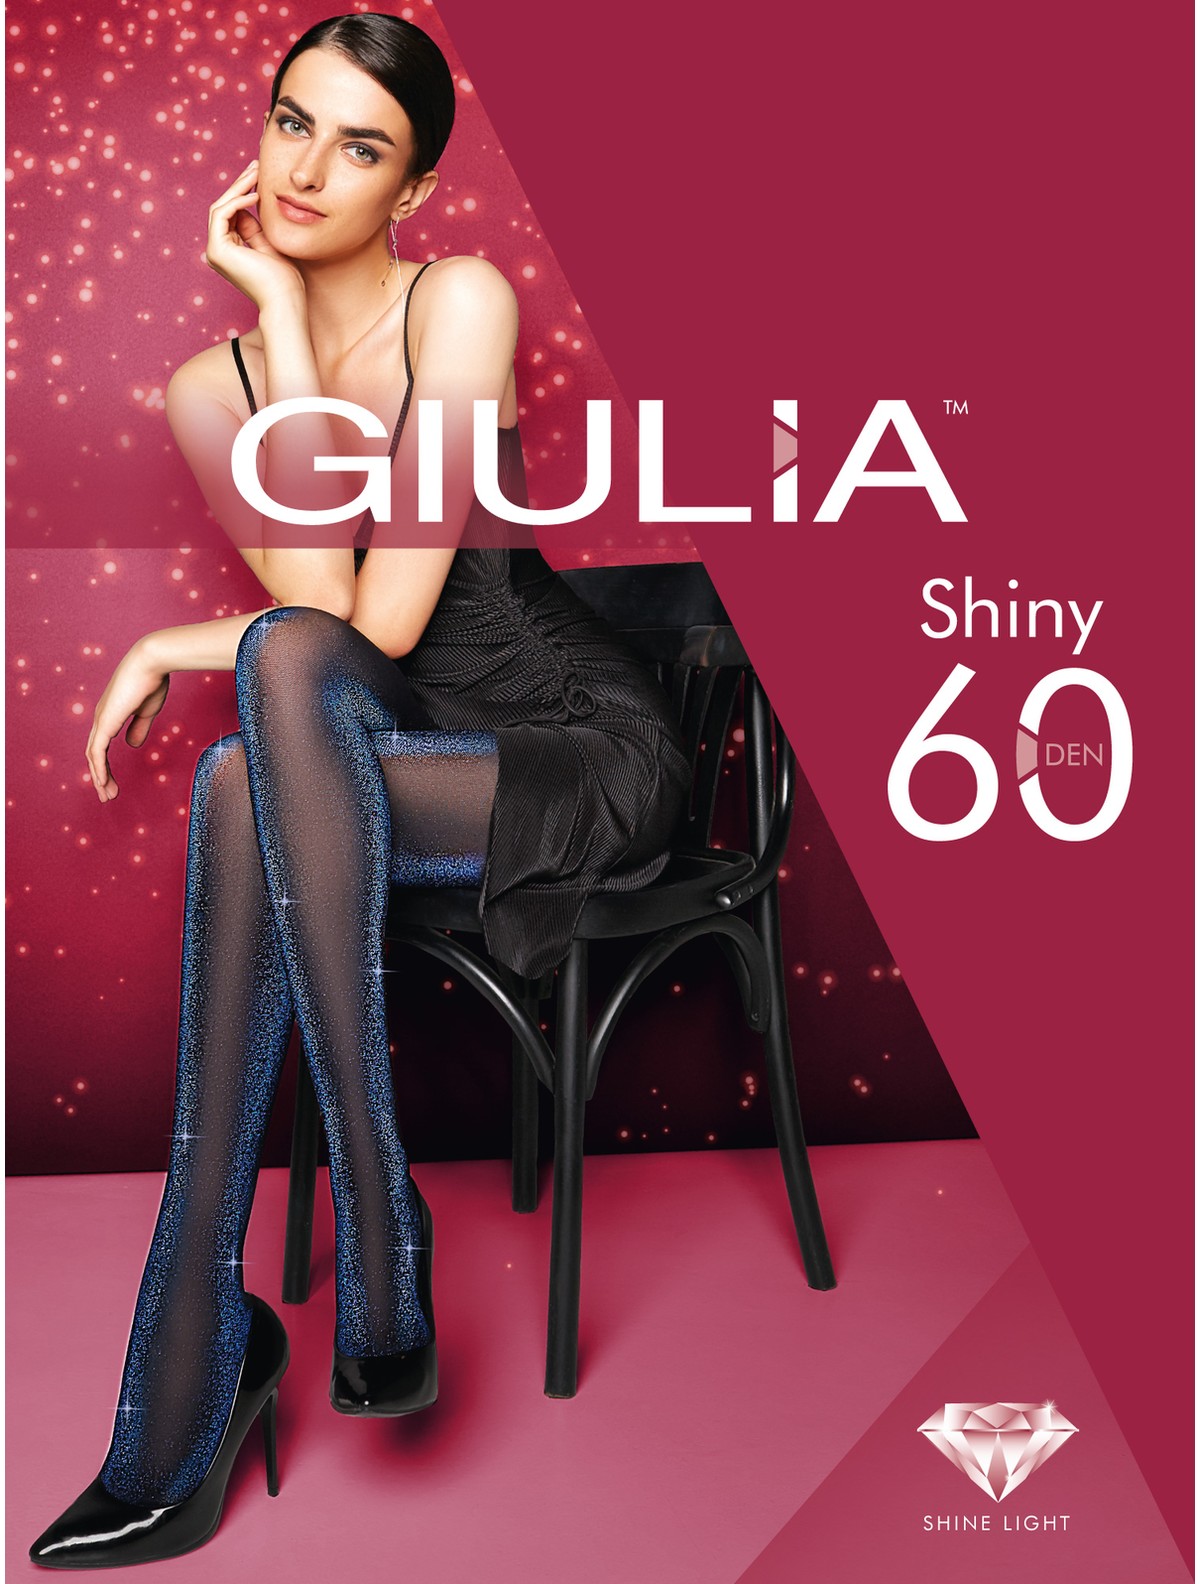 Giulia Shiny 60 Lurex Strumpfhose - Glänzendes ROSA Lurex